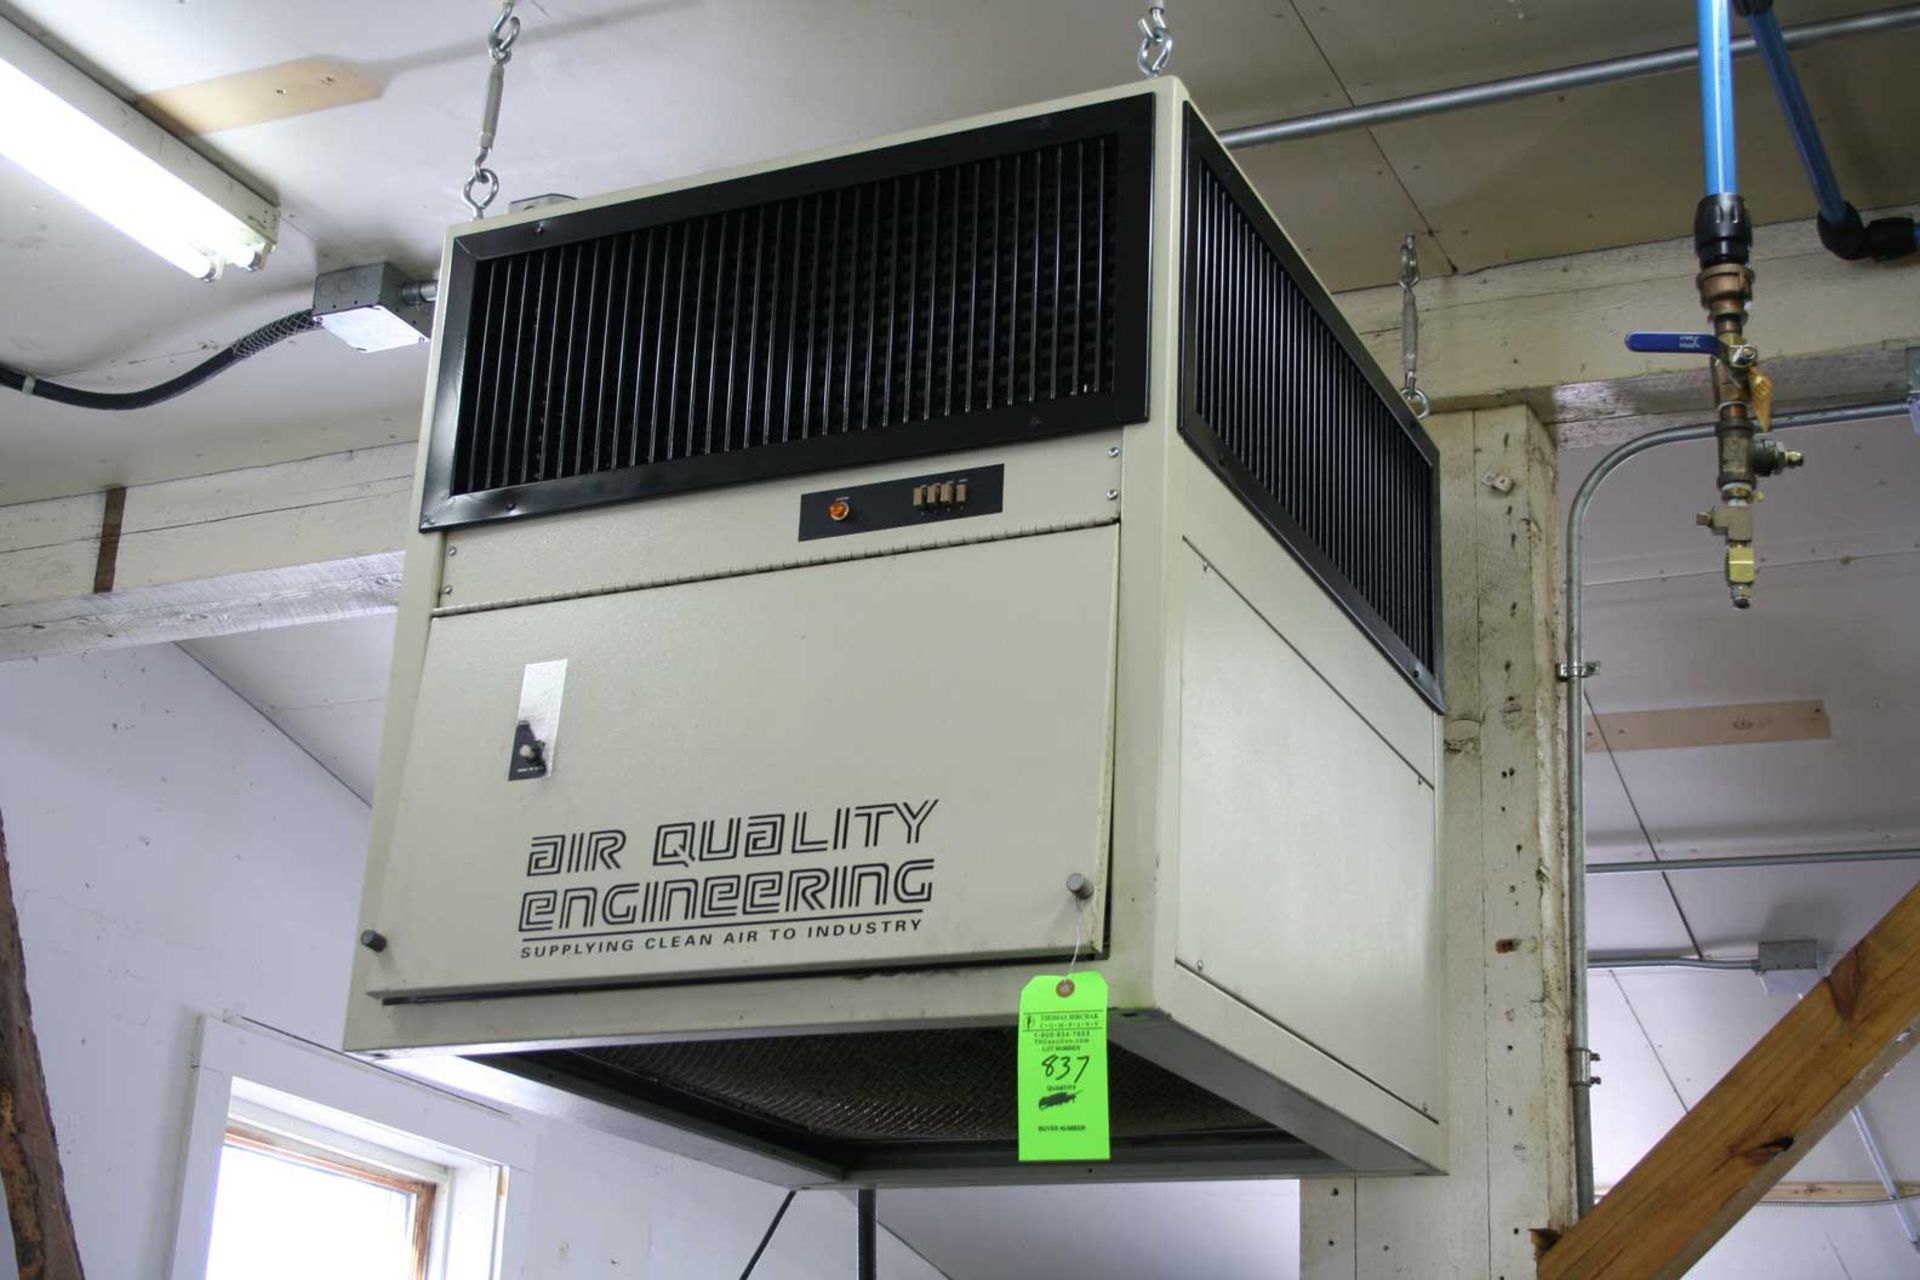 Air Quality Engineering Air Filtration System m/n F62B1003